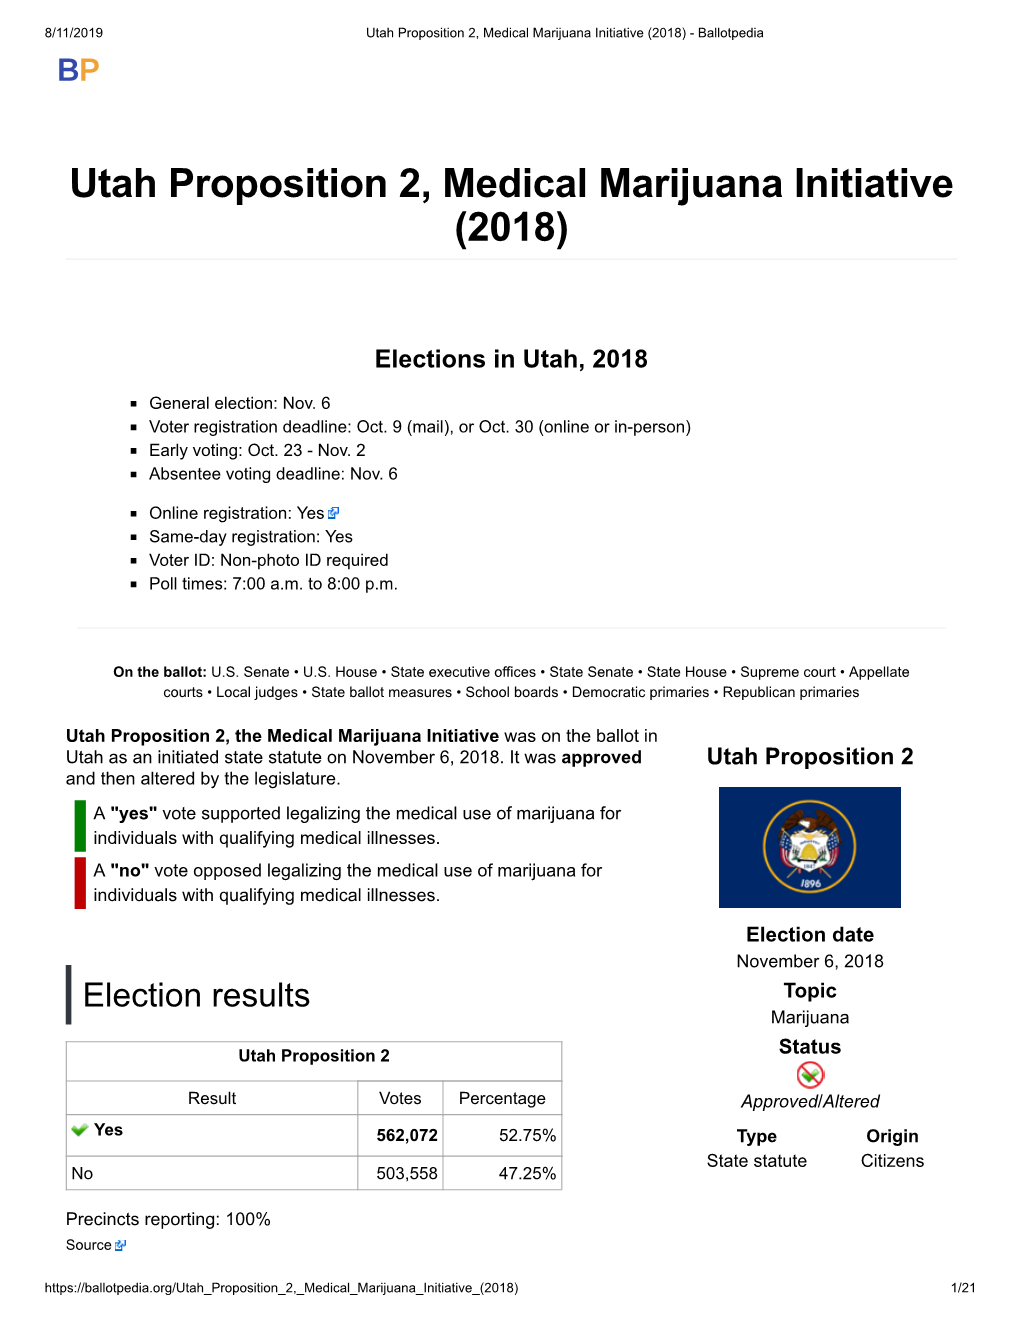 Utah Proposition 2, Medical Marijuana Initiative (2018) - Ballotpedia